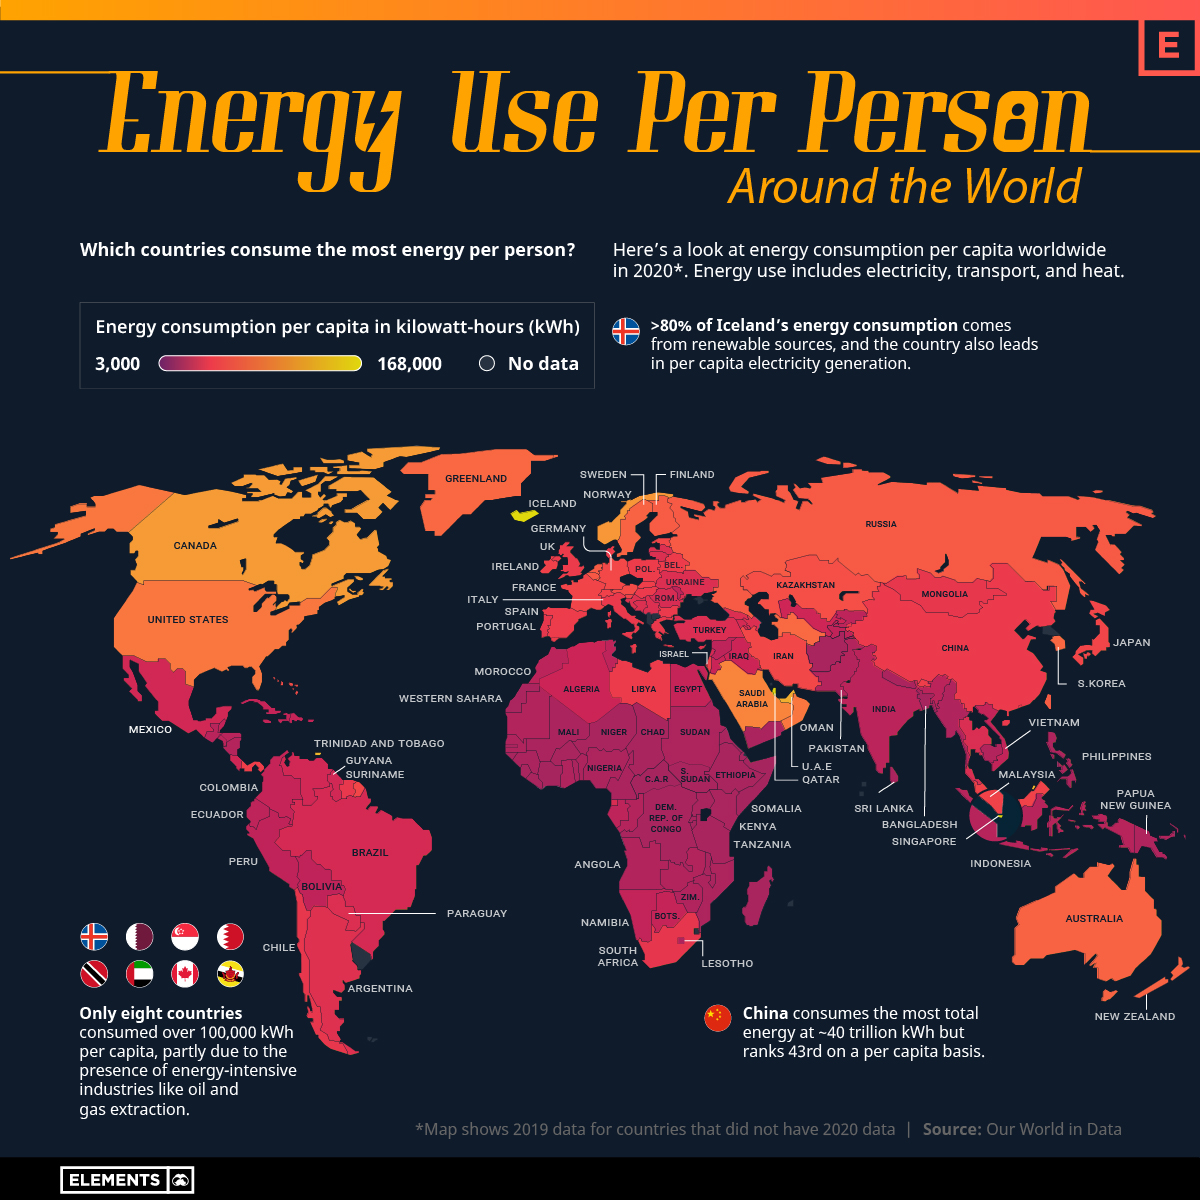 Mapped: Energy Consumption Per Capita Around the World